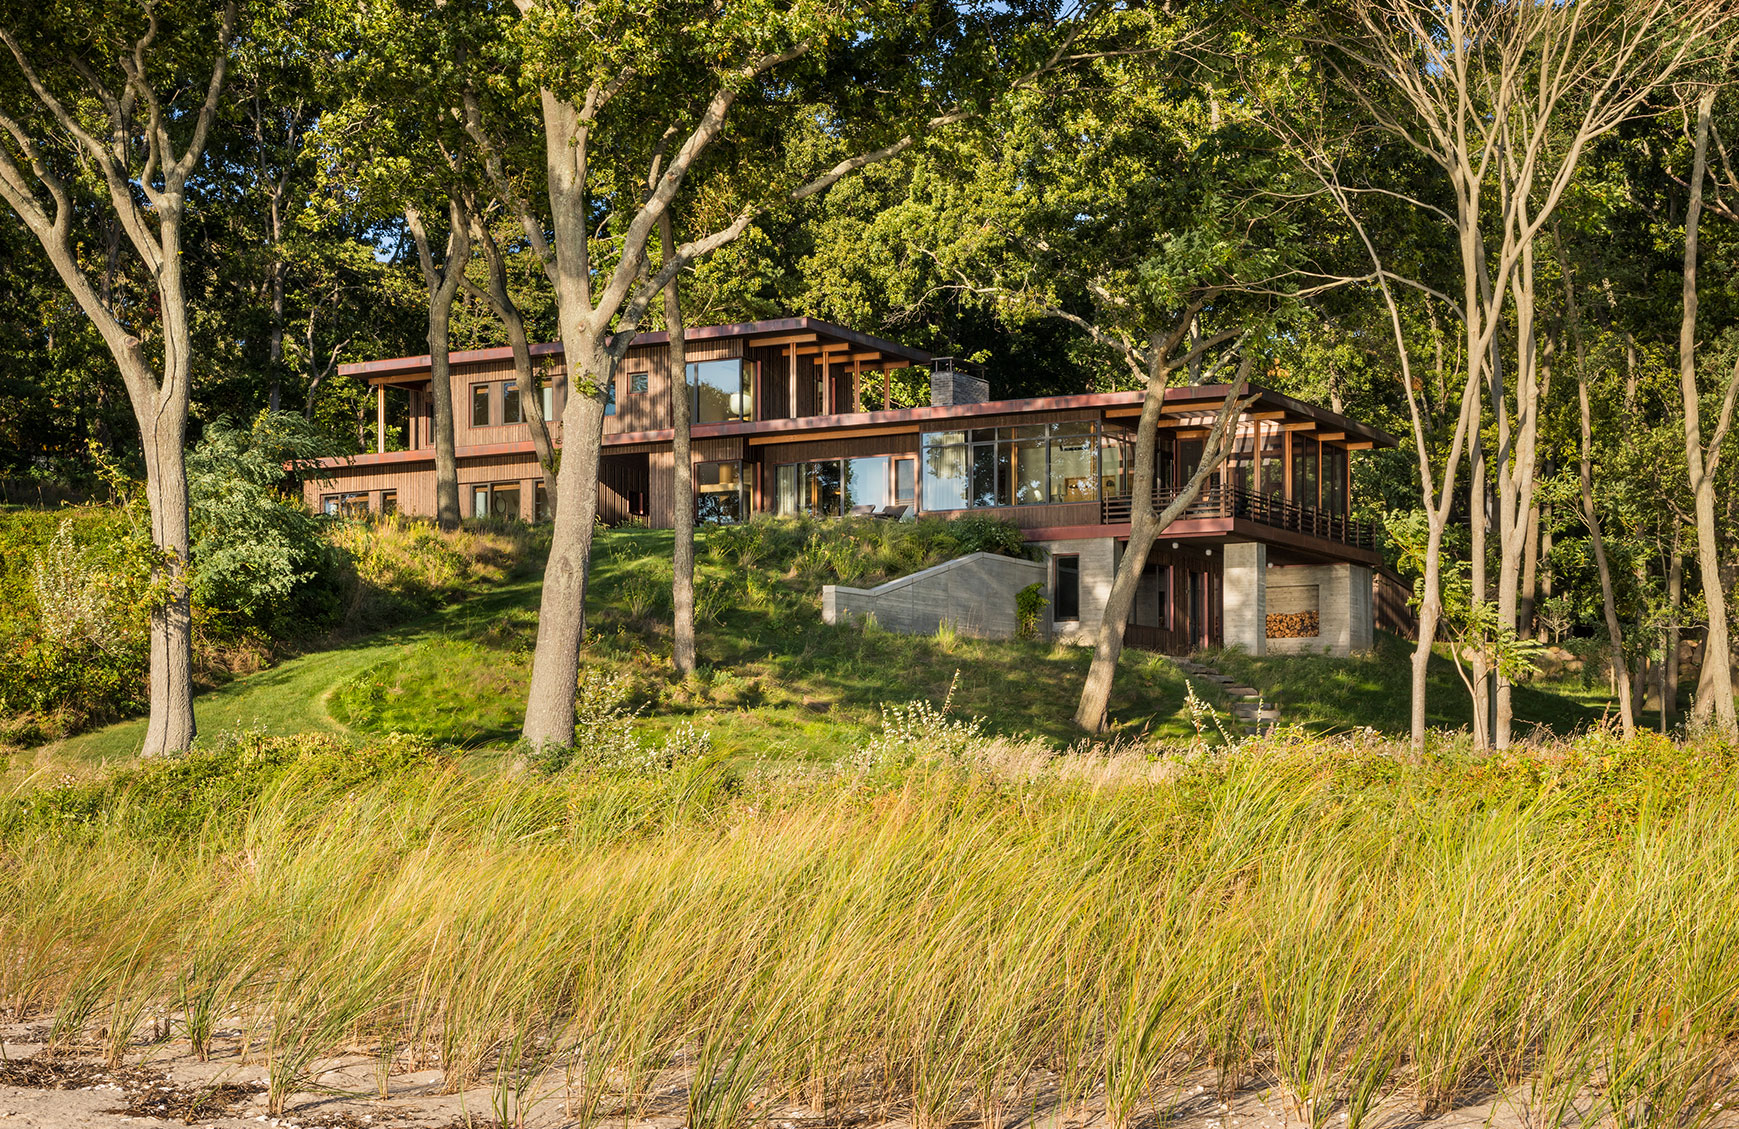 East End House, Long Island, NY - A new high-performance, modern beach home.